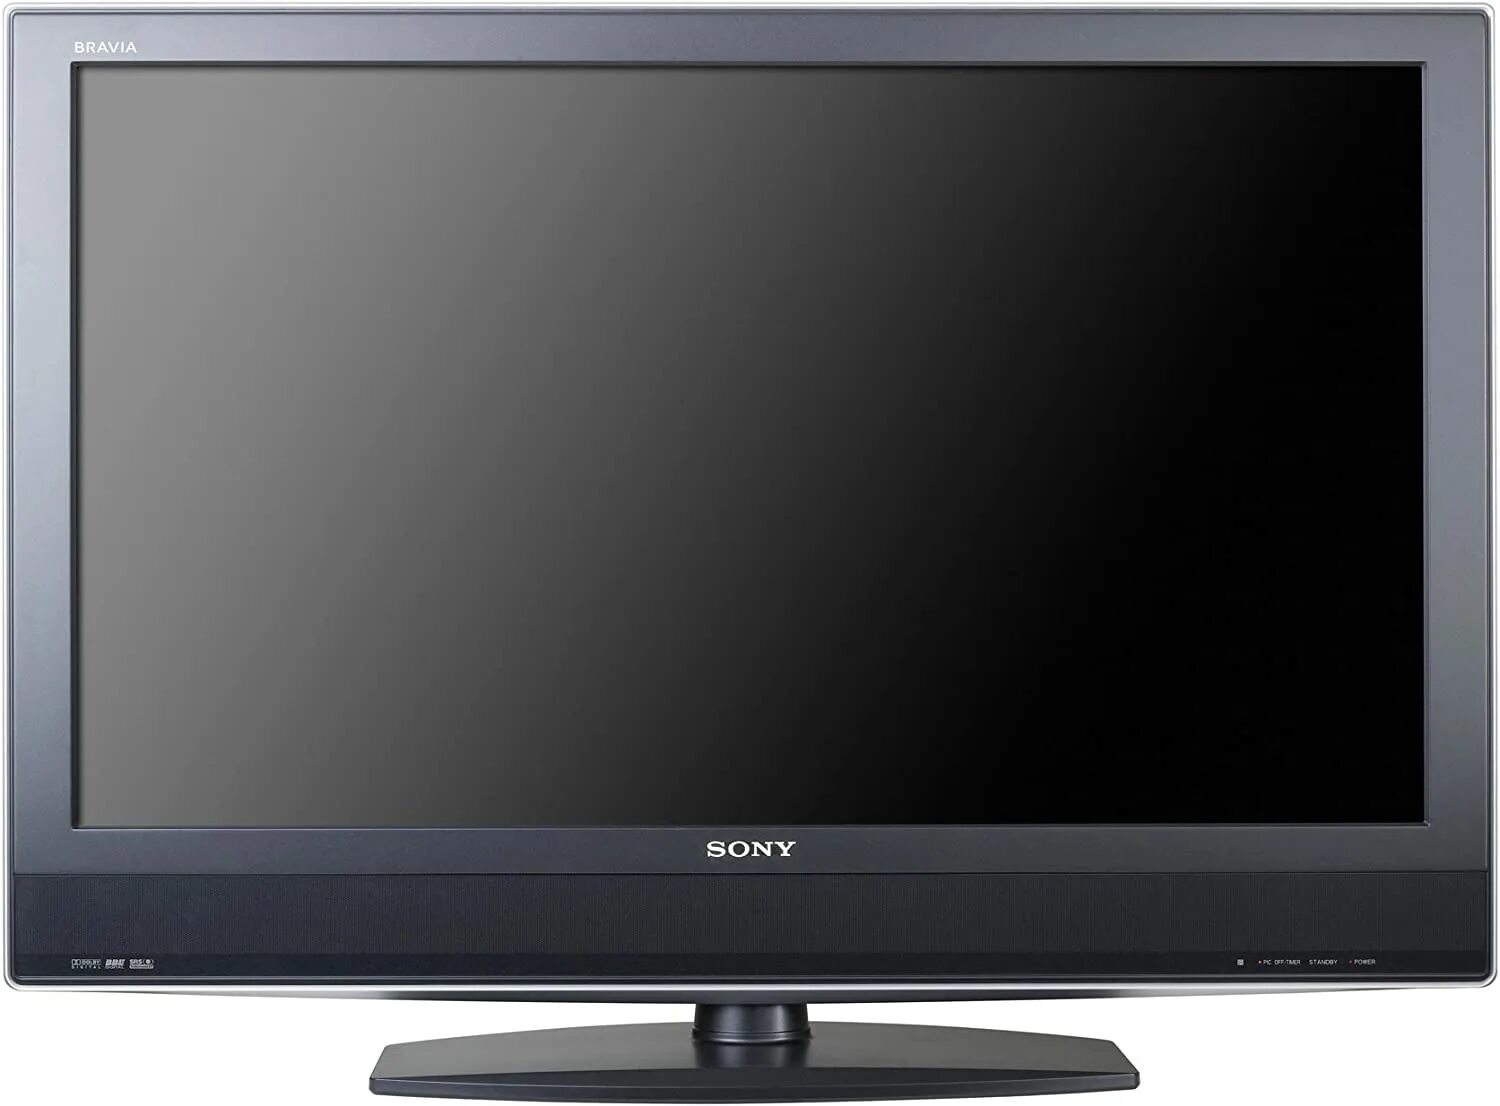 Ремонт телевизоров sony ремсити. Sony Bravia KDL-32s2010. Телевизор Sony Bravia 2010. Сони бравиа 32 2010. Sony Bravia 32 LCD.